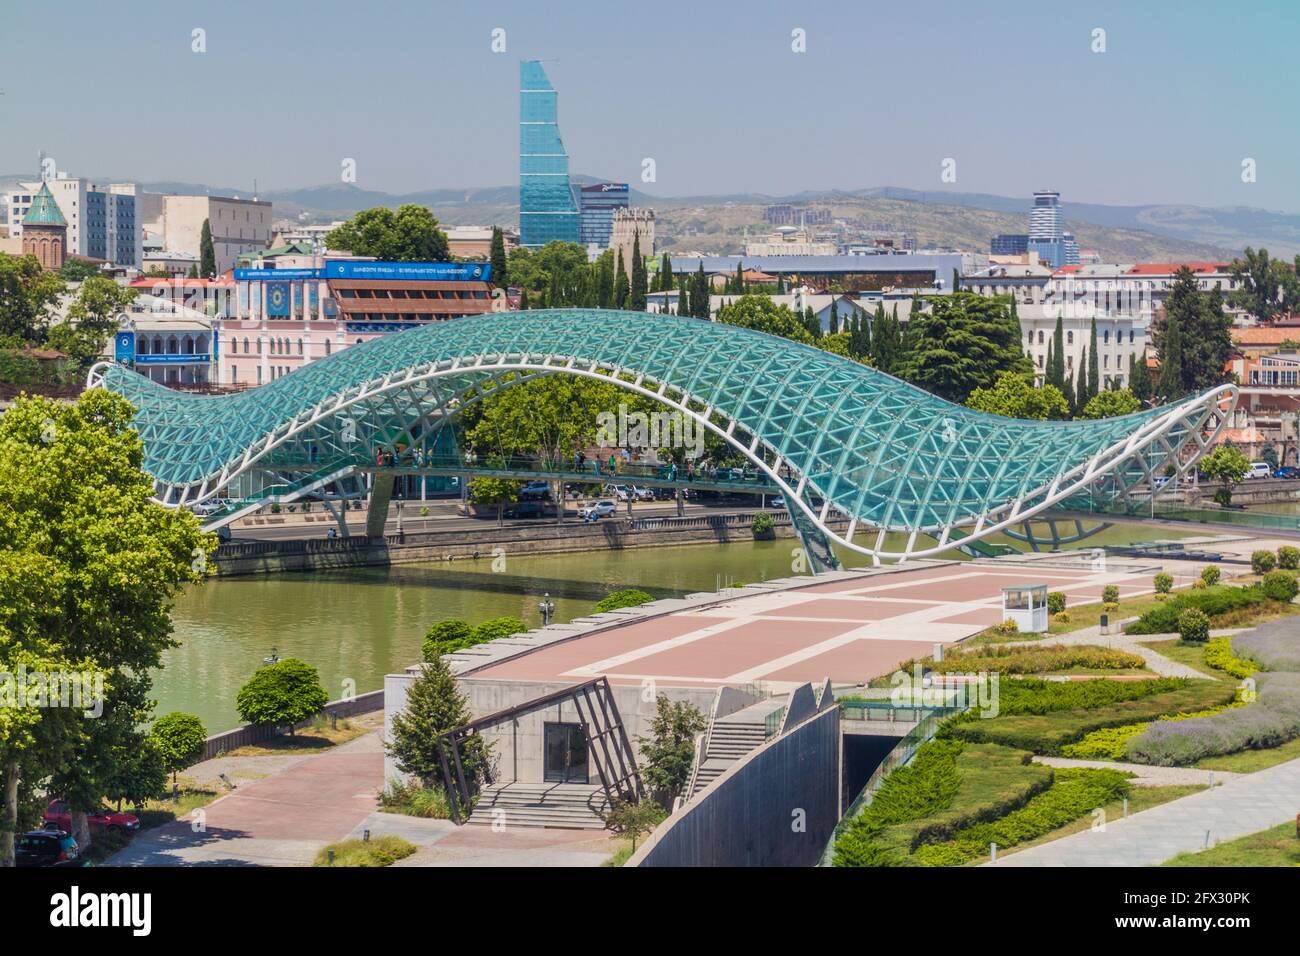 TBILISI, GEORGIA - JULY 17, 2017: View of the Peace Bridge in Tbilisi, Georgia Stock Photo